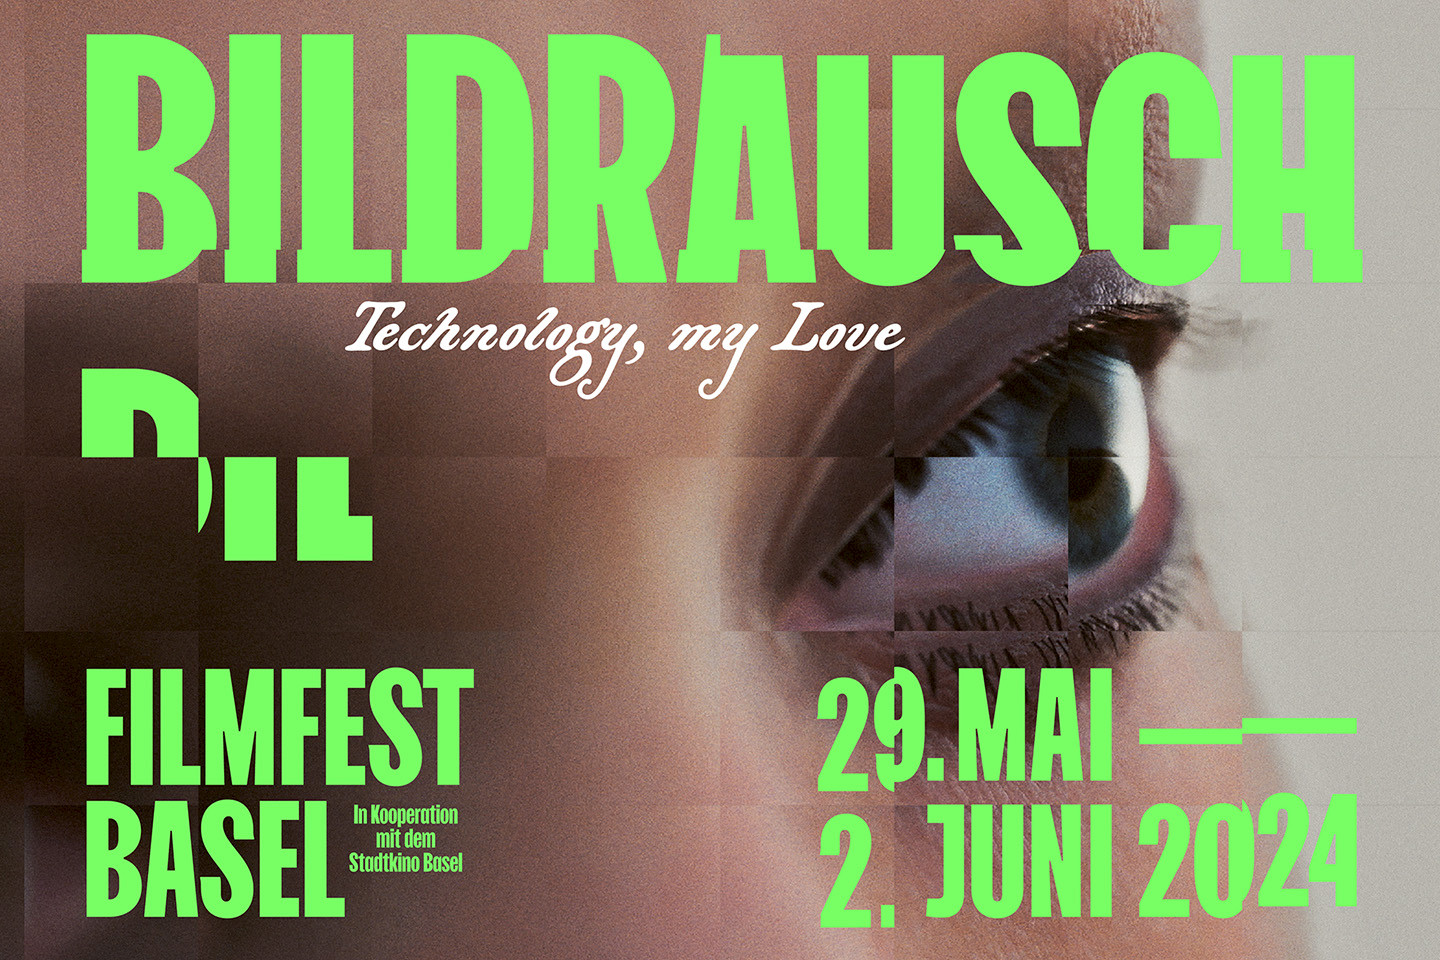 Bildrausch Filmfest Basel 2024